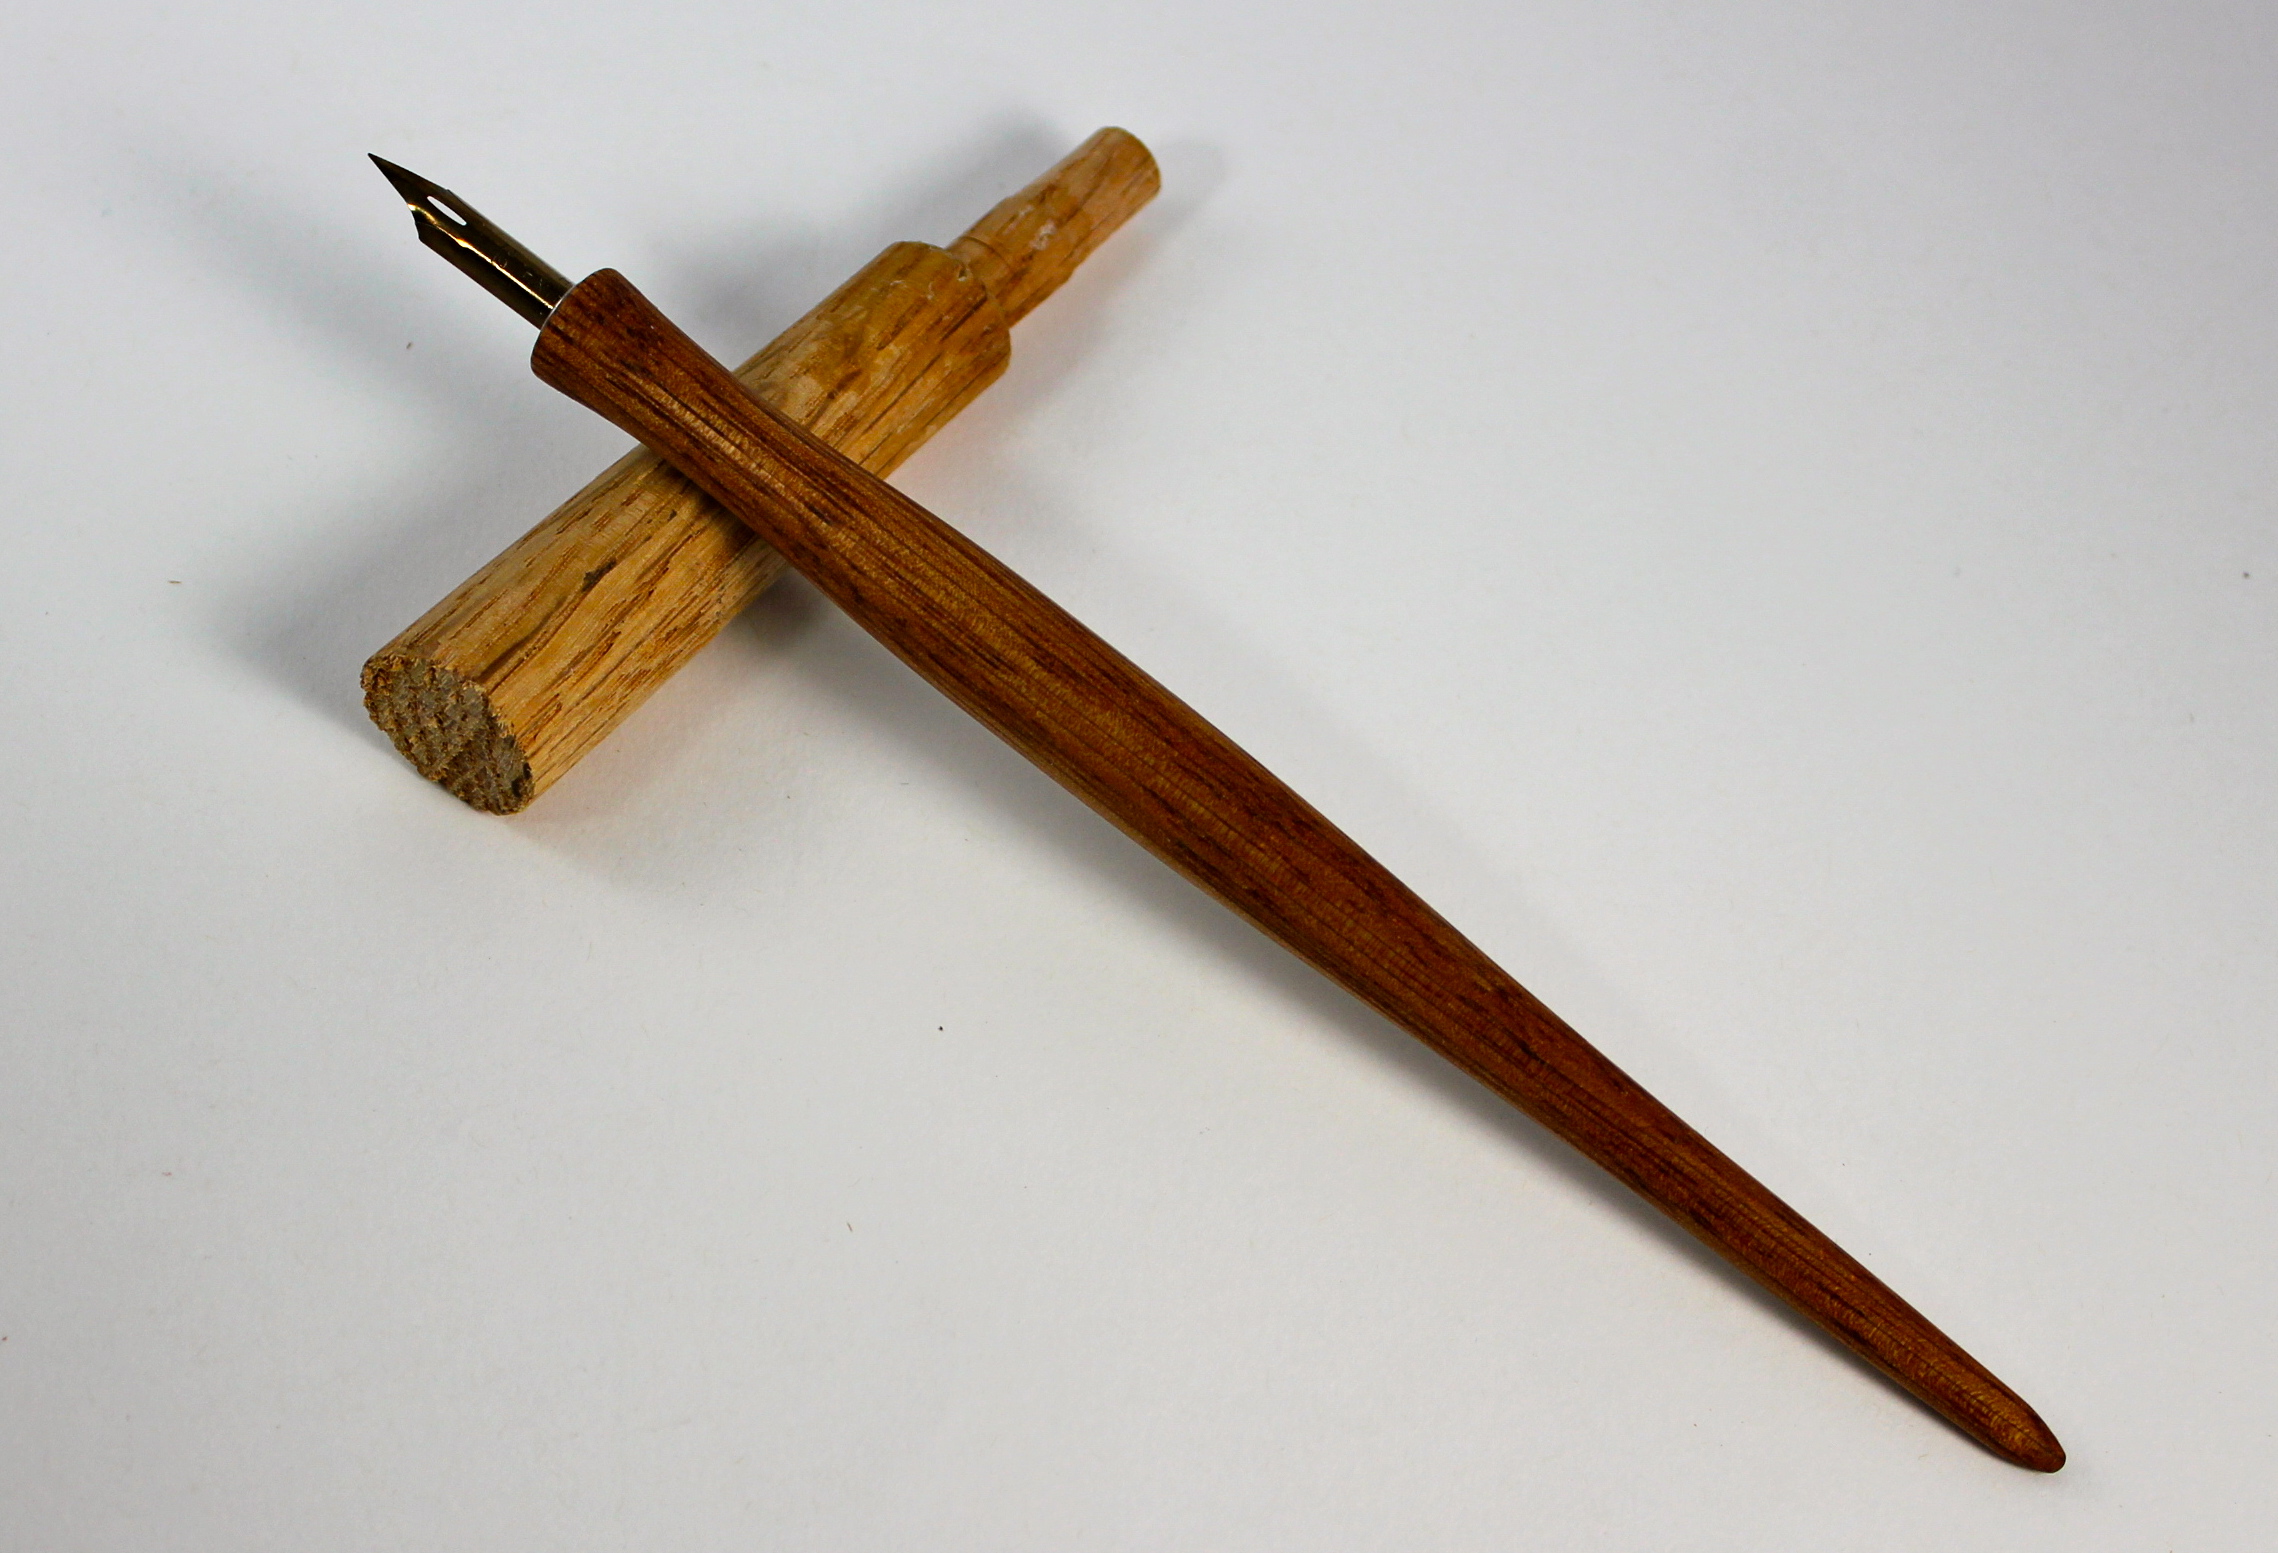 Calligraphy Pen - Oak Ballaster